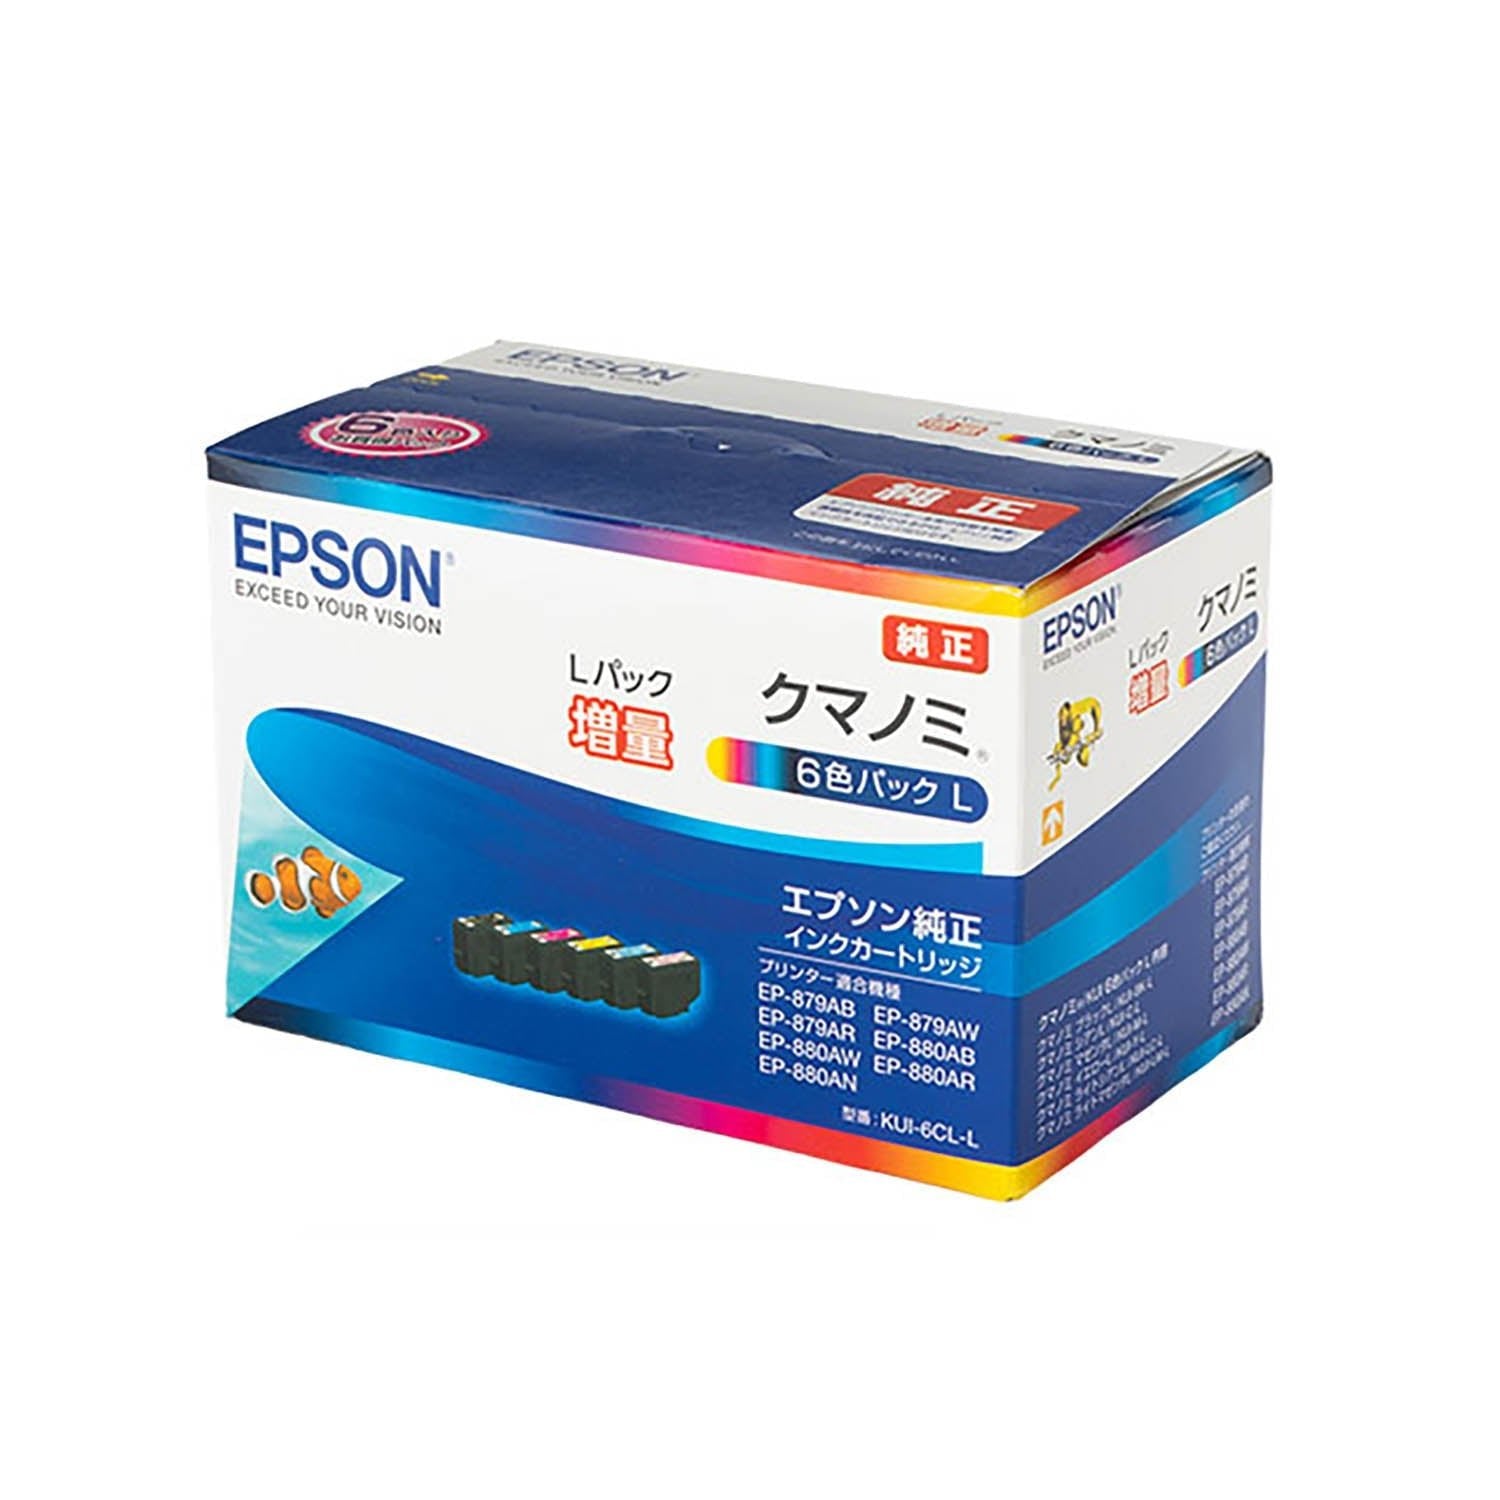 EPSON クマノミLパック 2箱セット